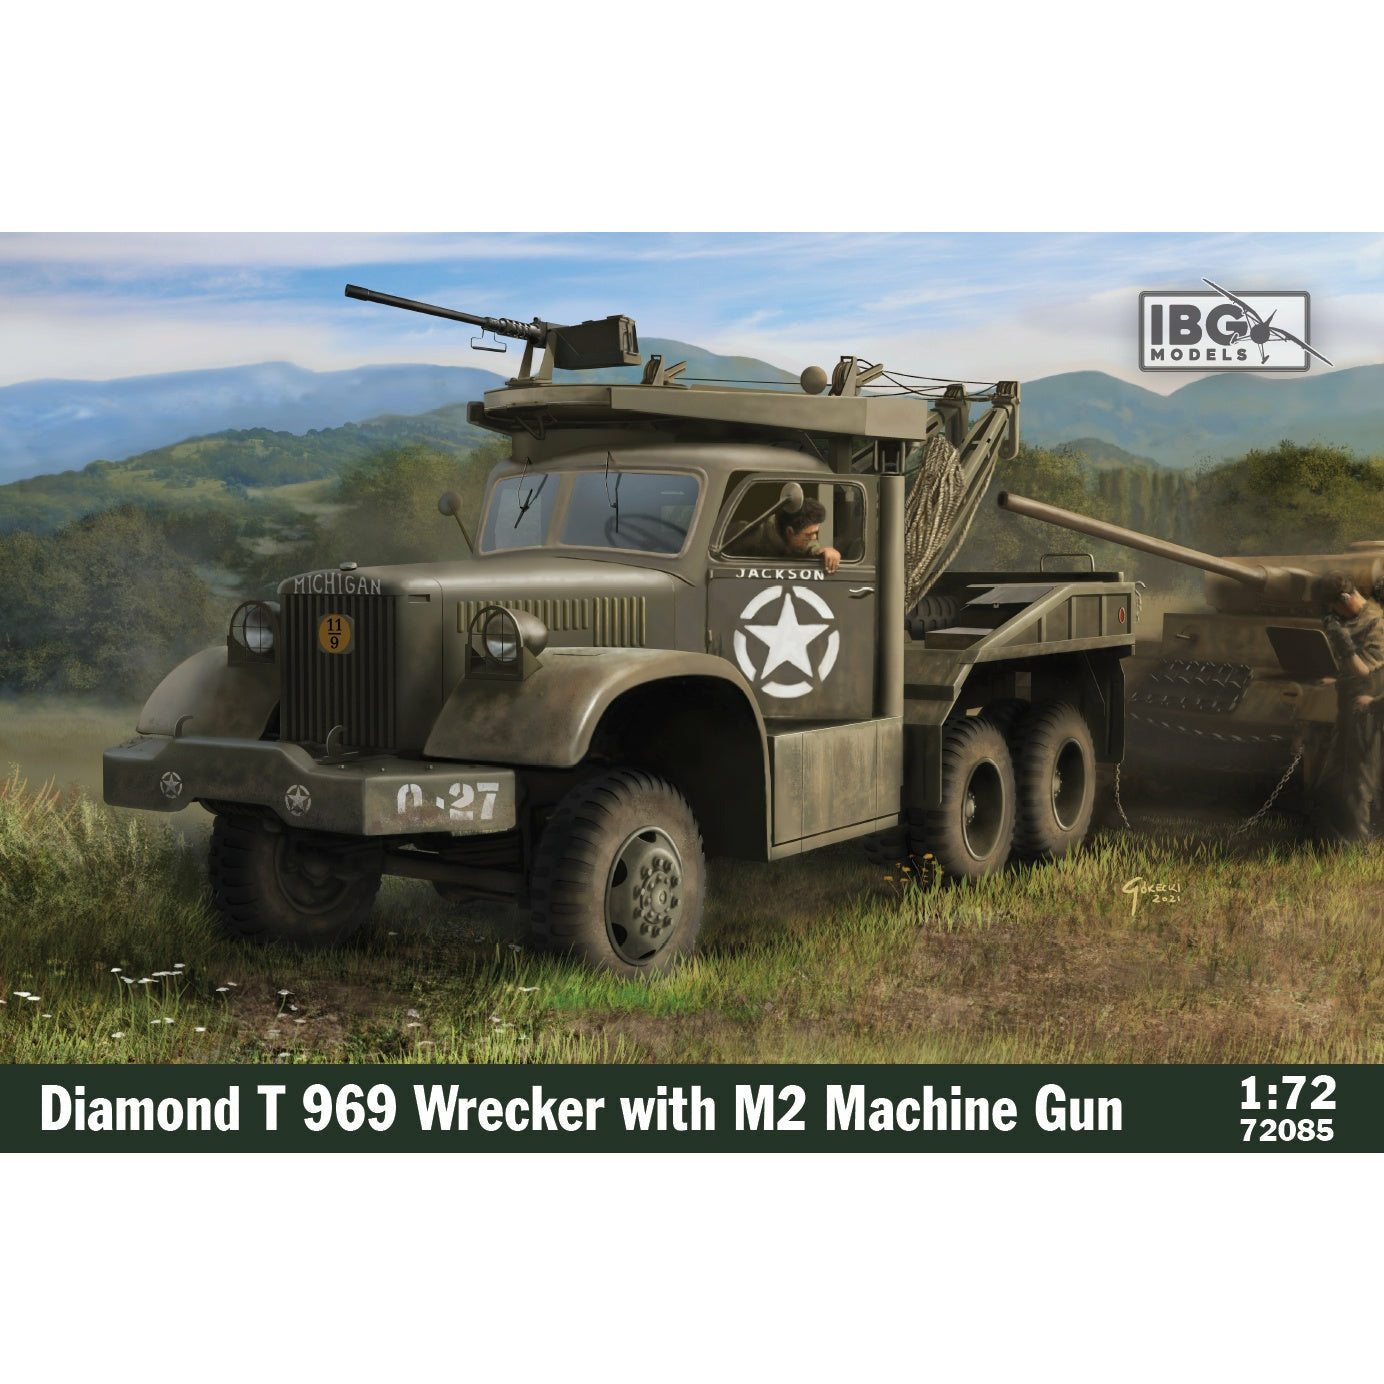 Diamond Wrecker Obrotnica + PE 1/72 #72085 by IBG Models